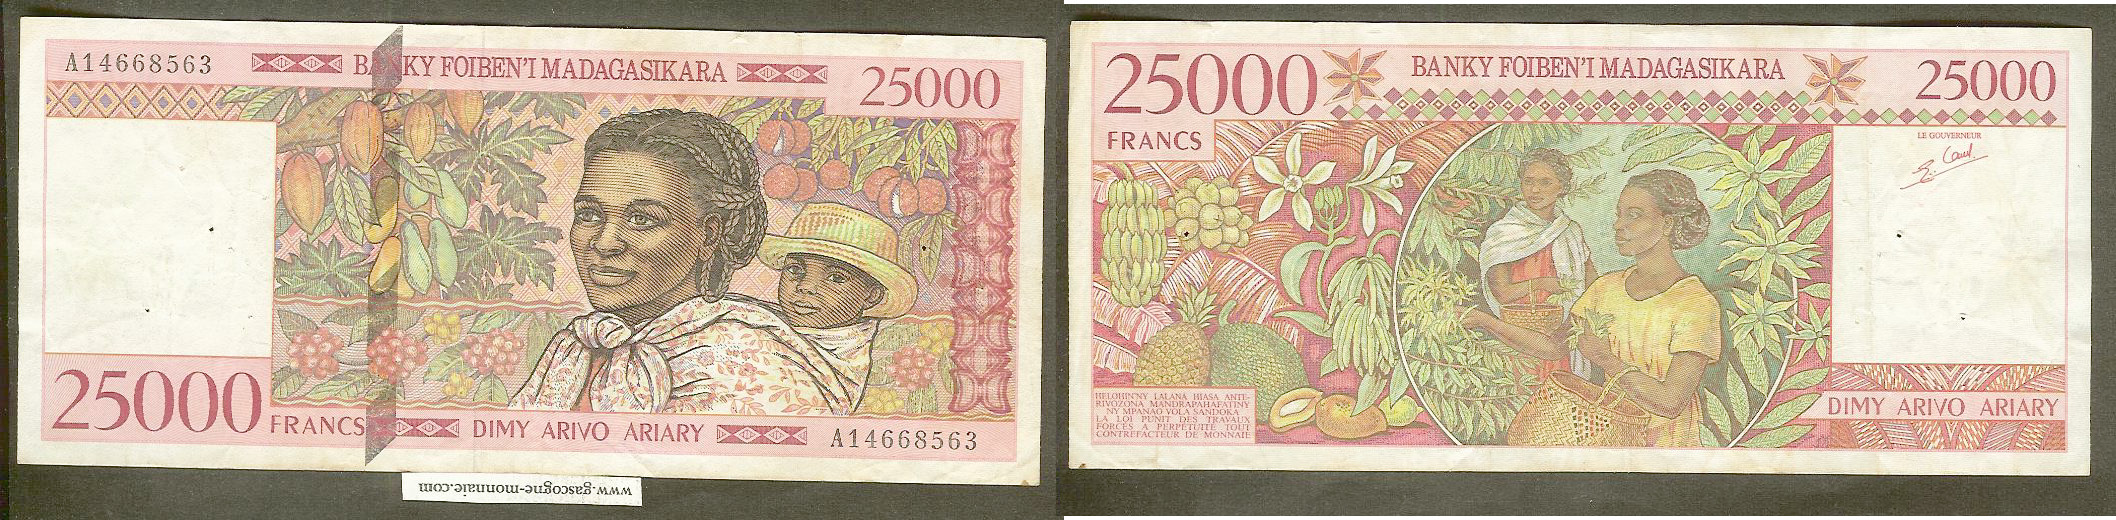 Madagascar 25000 francs 1998 VF+